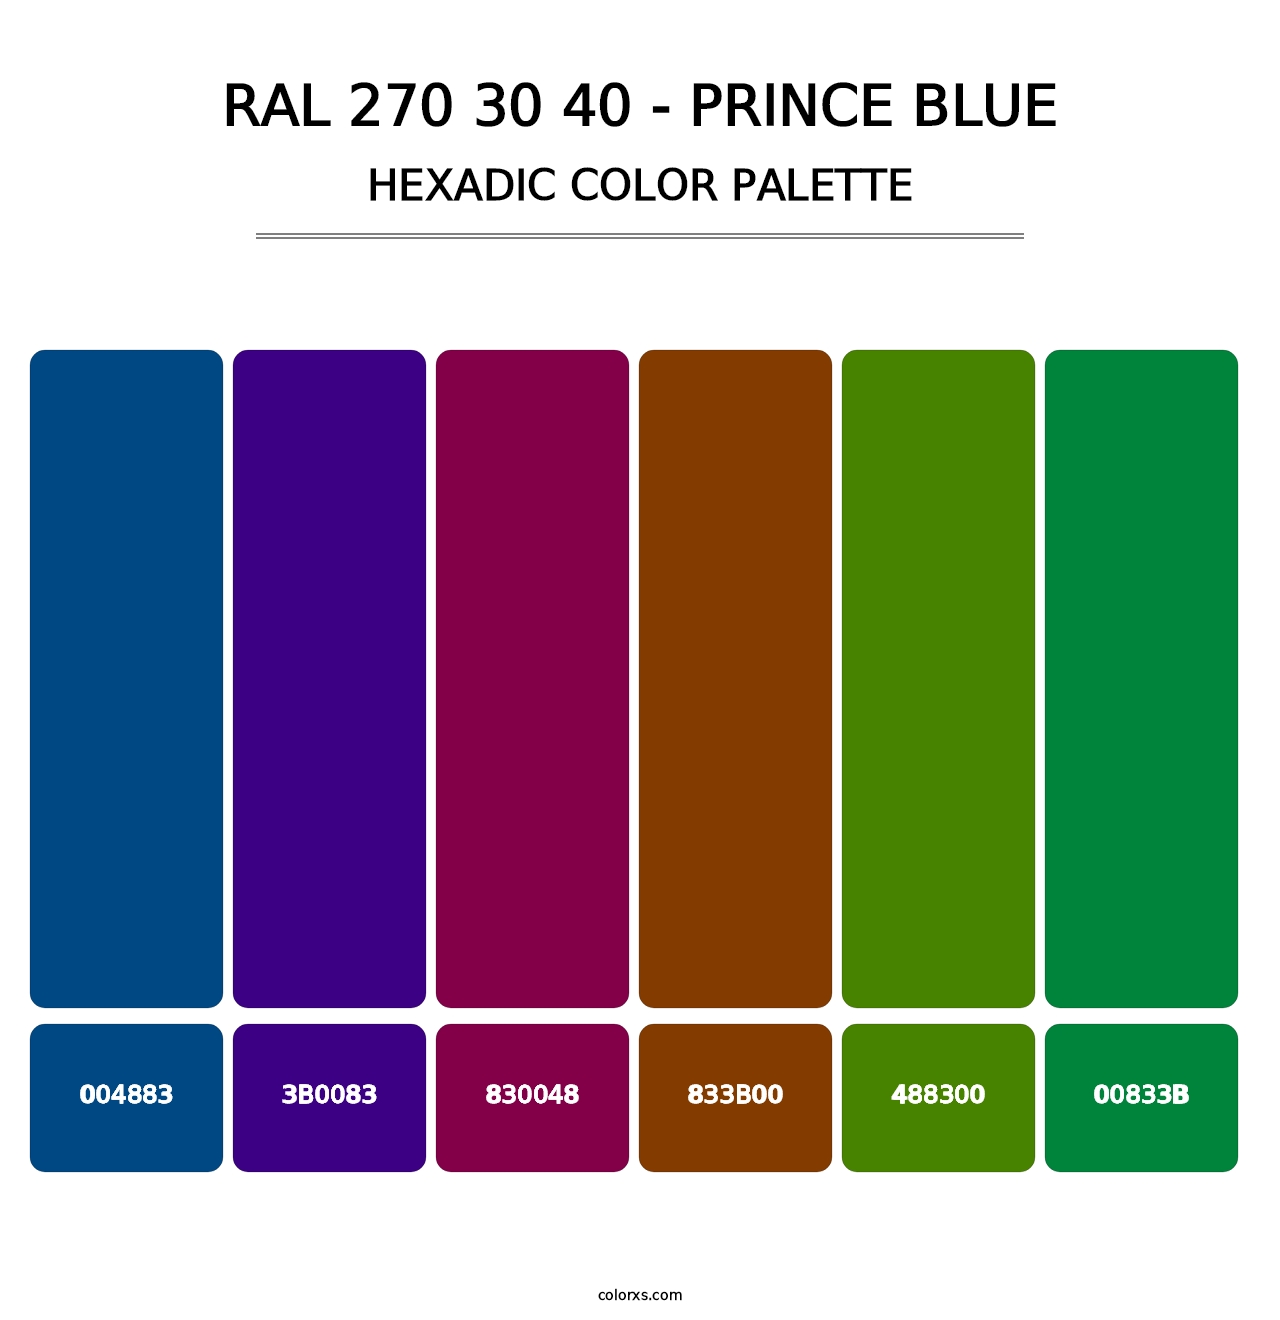 RAL 270 30 40 - Prince Blue - Hexadic Color Palette